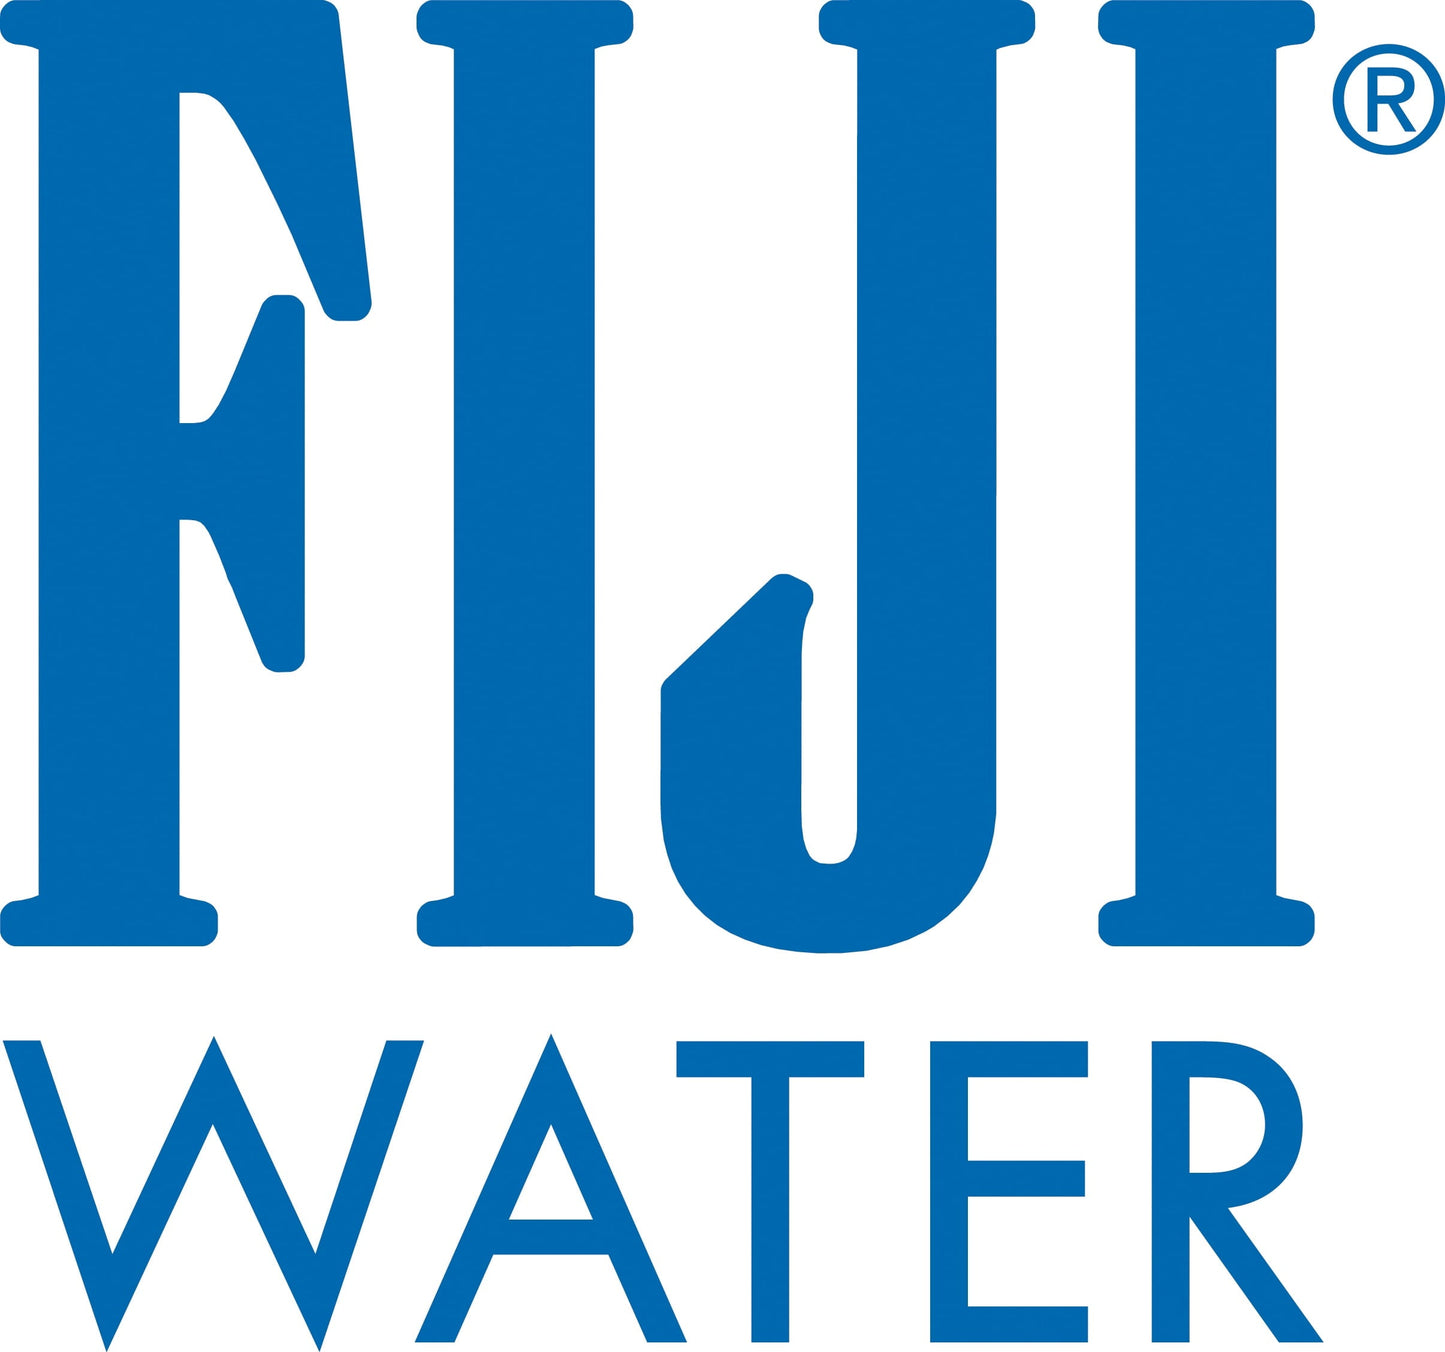 FIJI Natural Artesian Water, 16.9 Fl. Oz., 6 Count